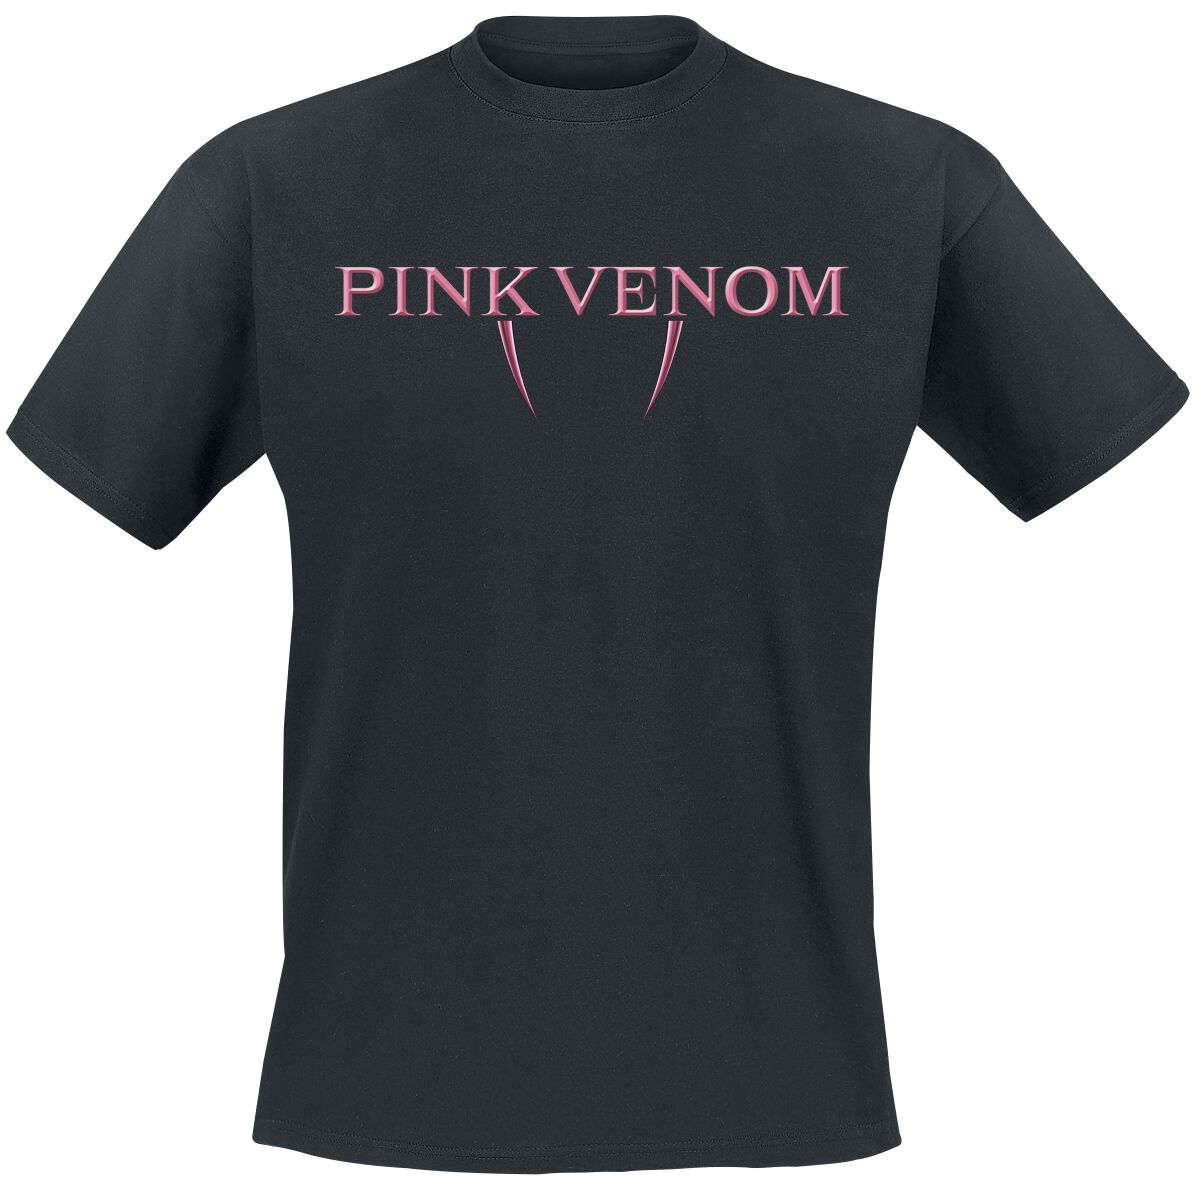 Blackpink Pink Venom Fangs T-Shirt schwarz in M